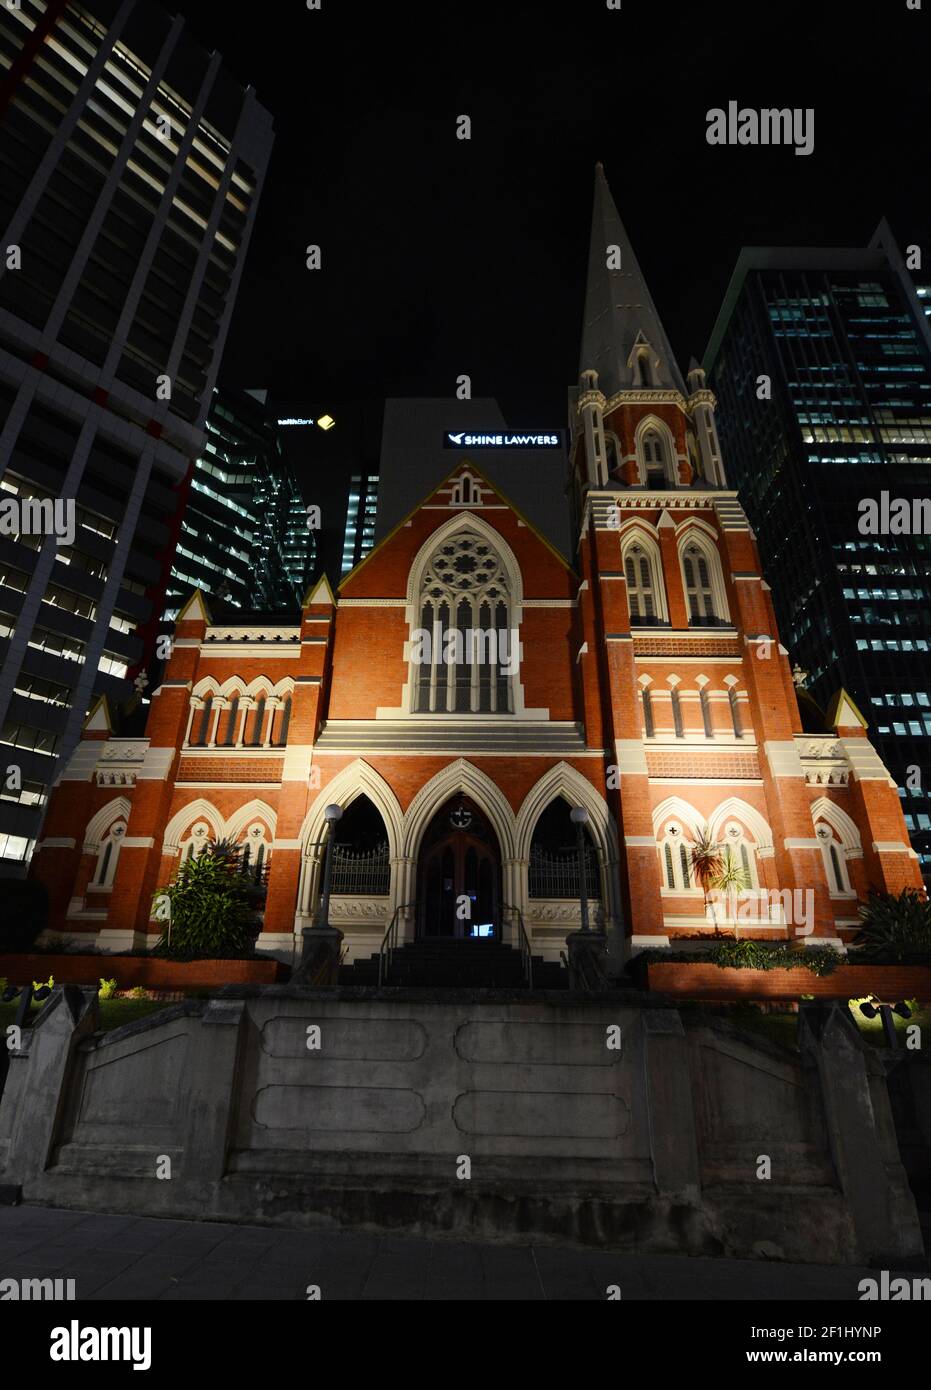 Albert Street Uniting Church at night, Brisbane, Australia. Stock Photo